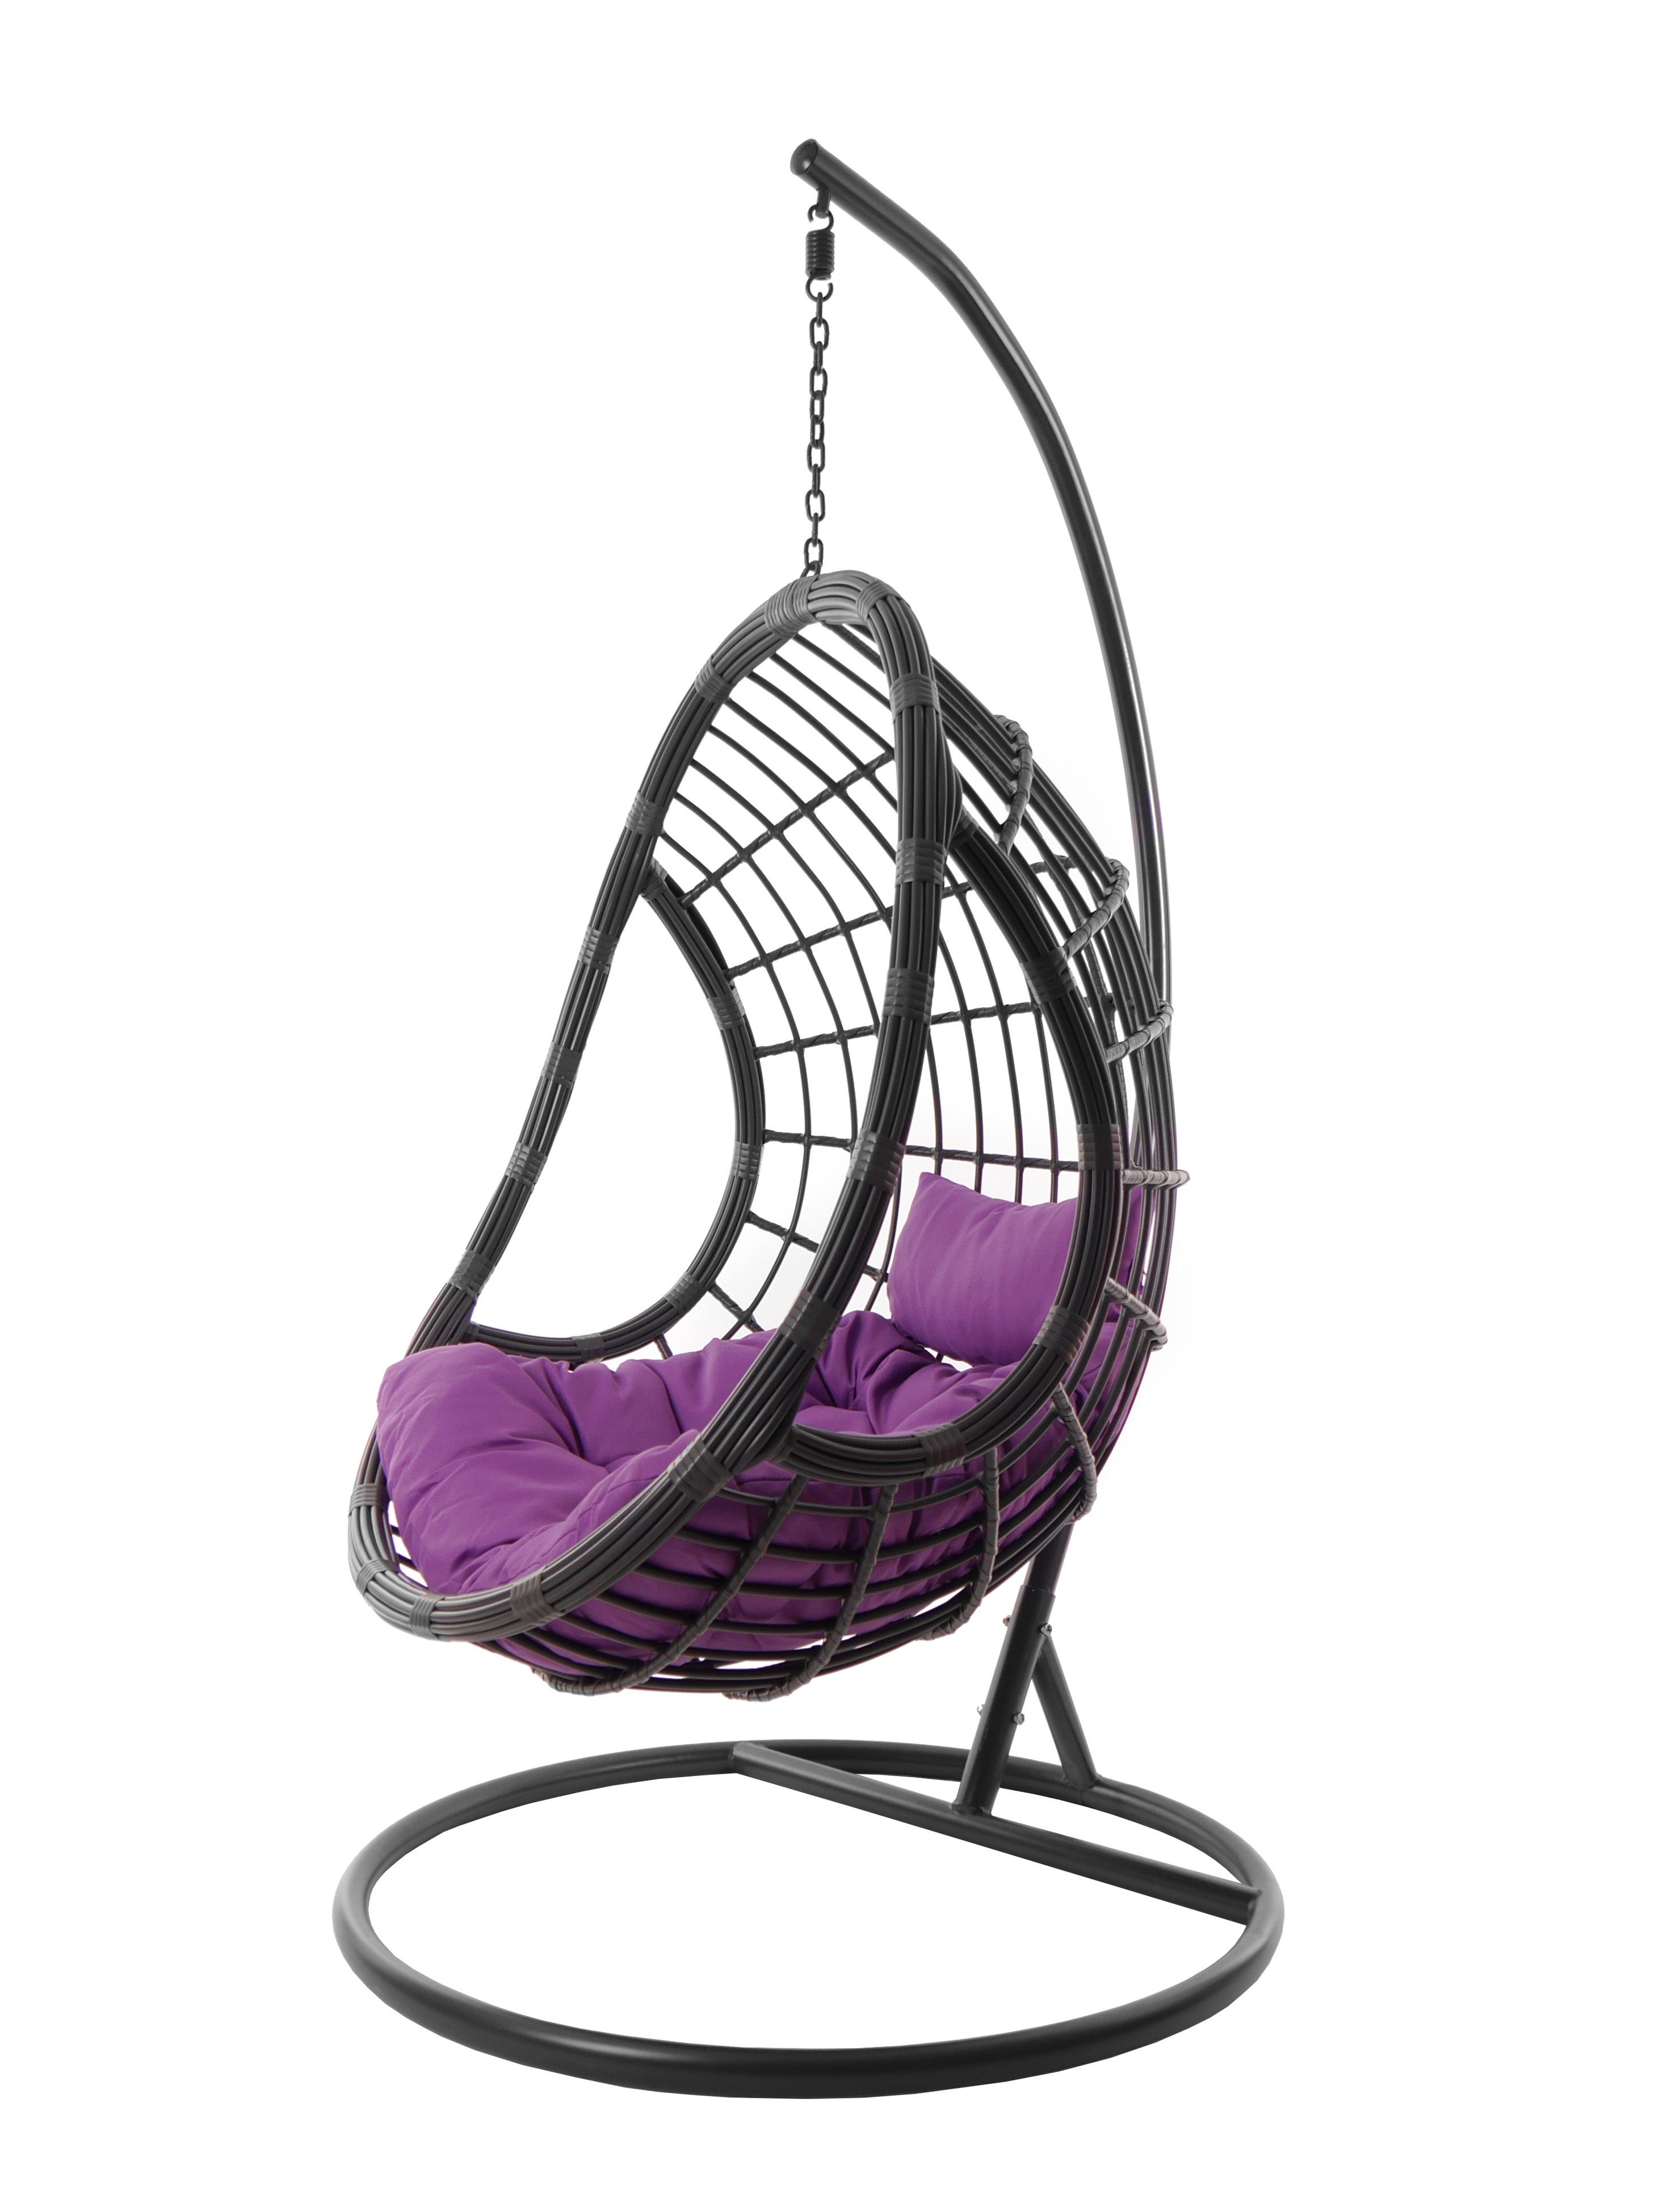 KIDEO Hängesessel Hängesessel PALMANOVA grau, eleganter Hängestuhl in grau, inklusive Gestell und Kissen lila (4050 violet)